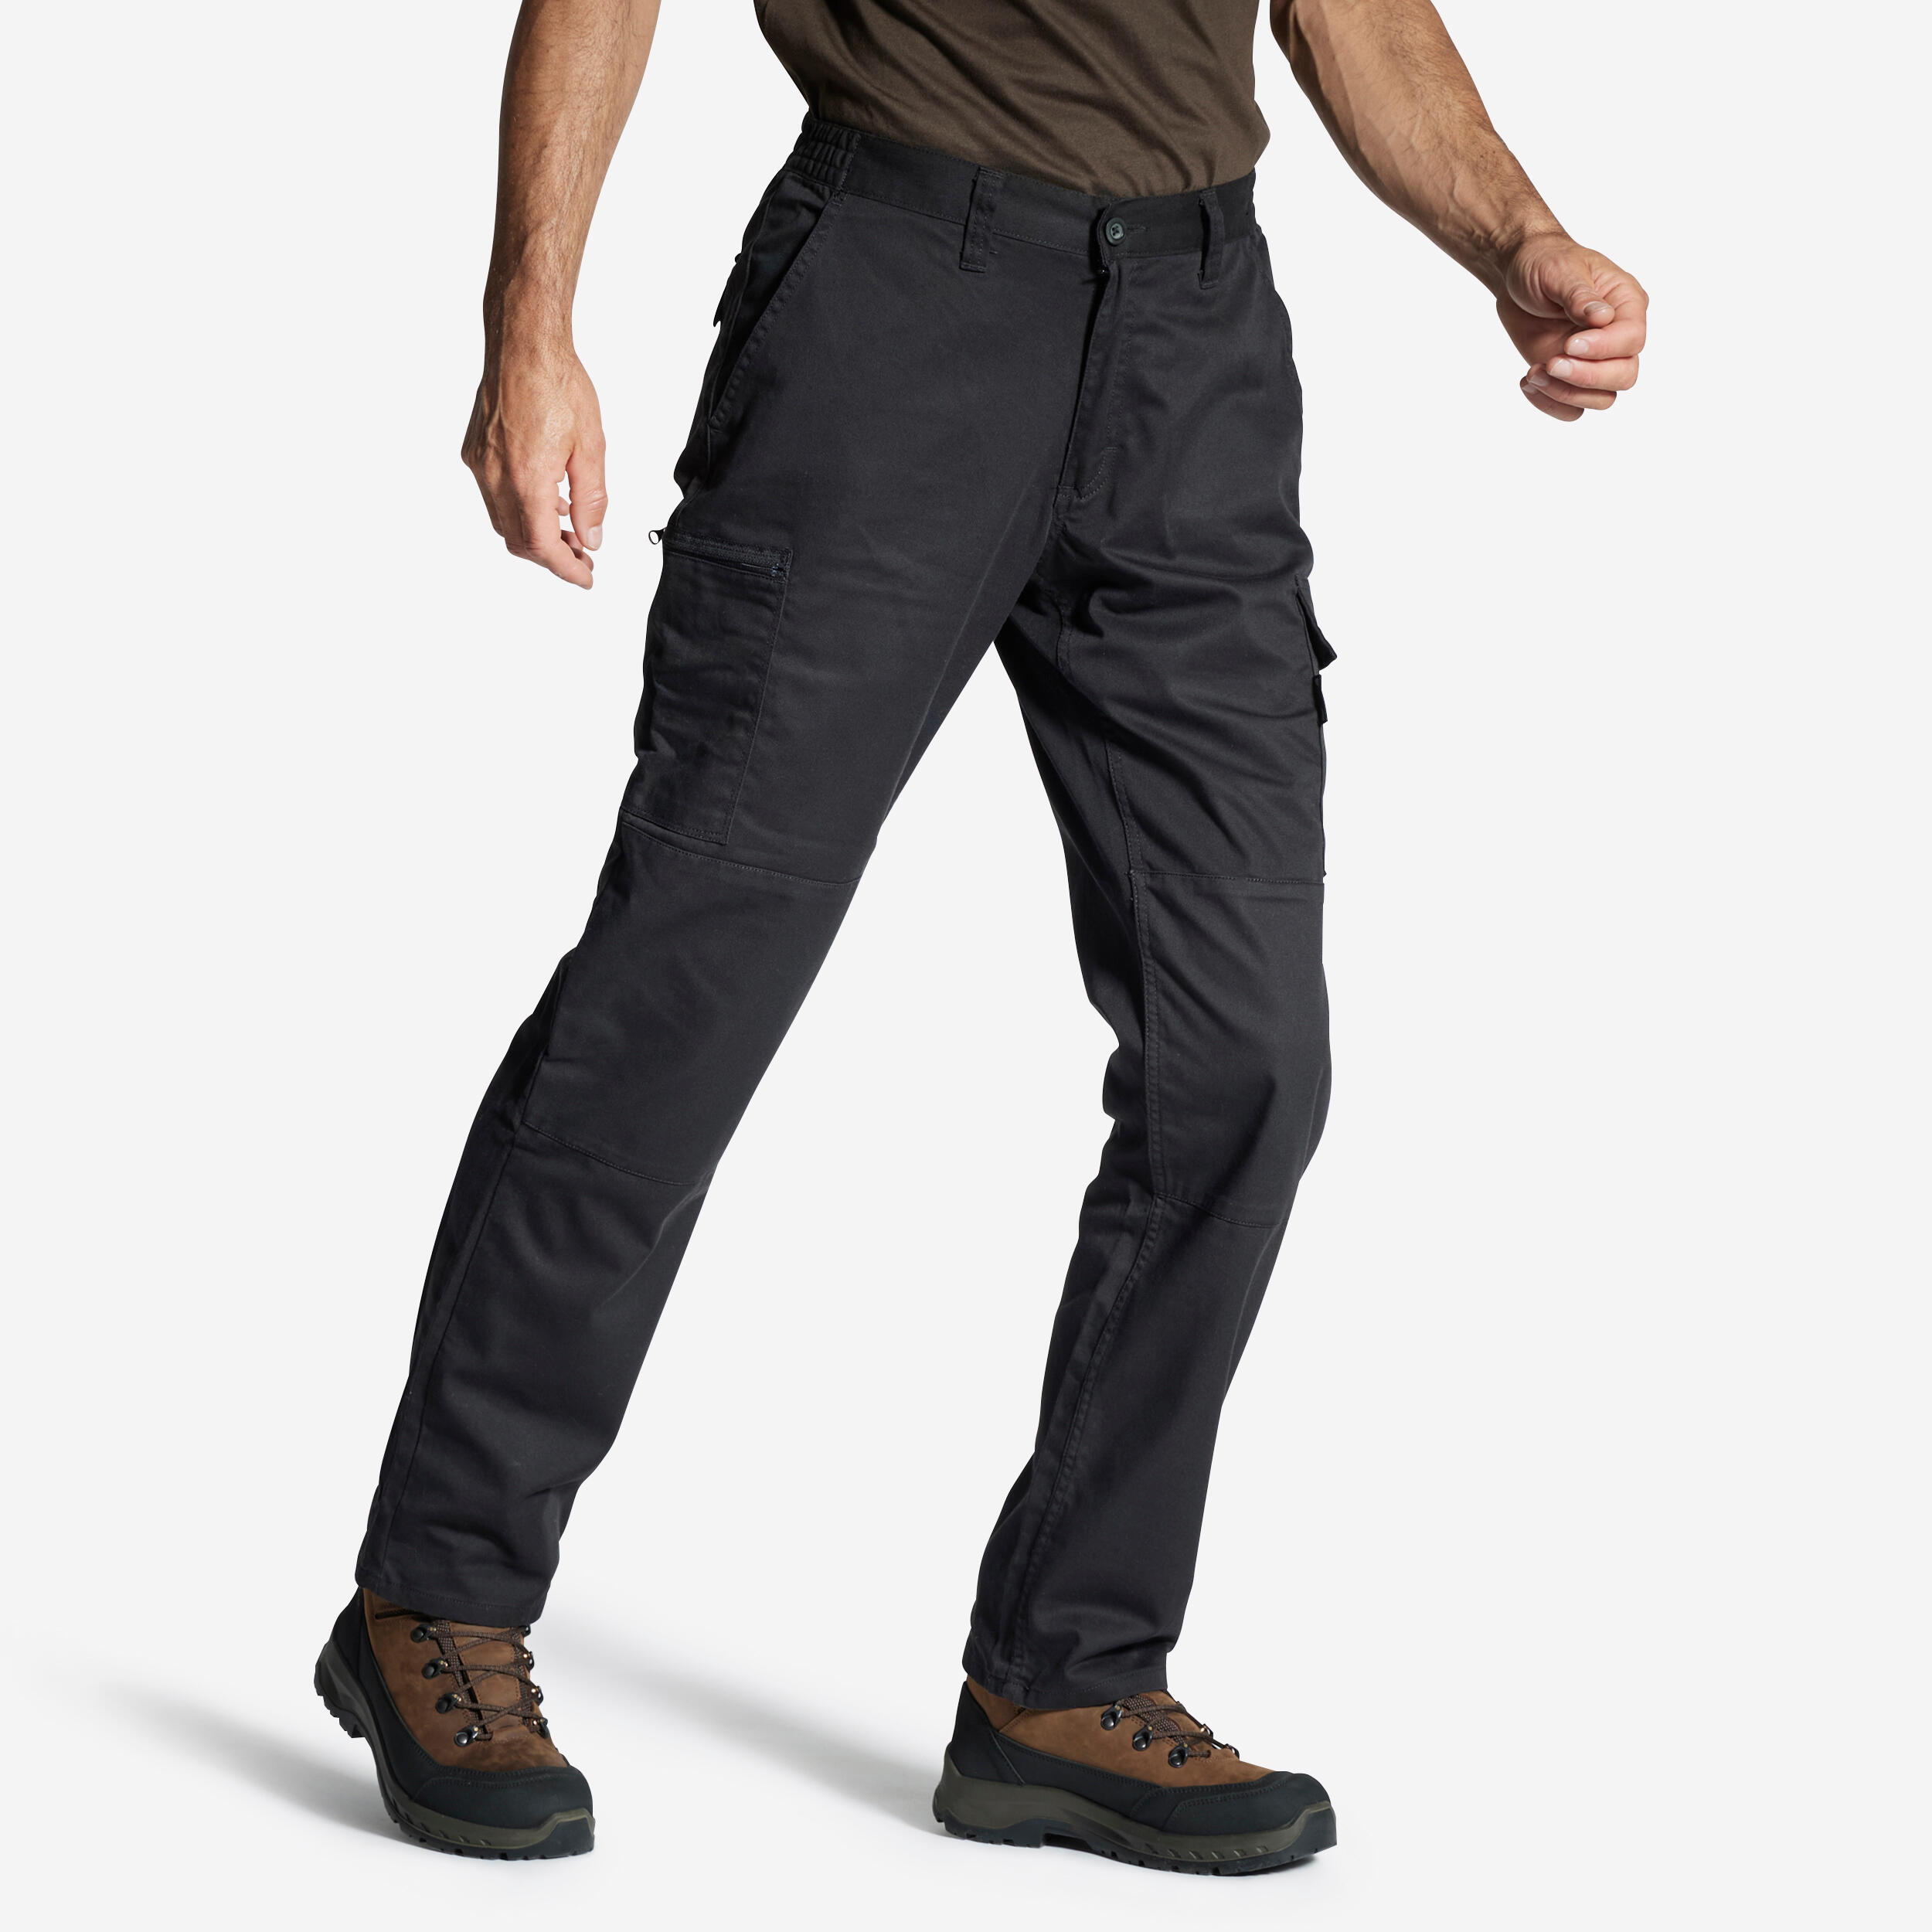 Black Lightweight Pocket Cargo Pants